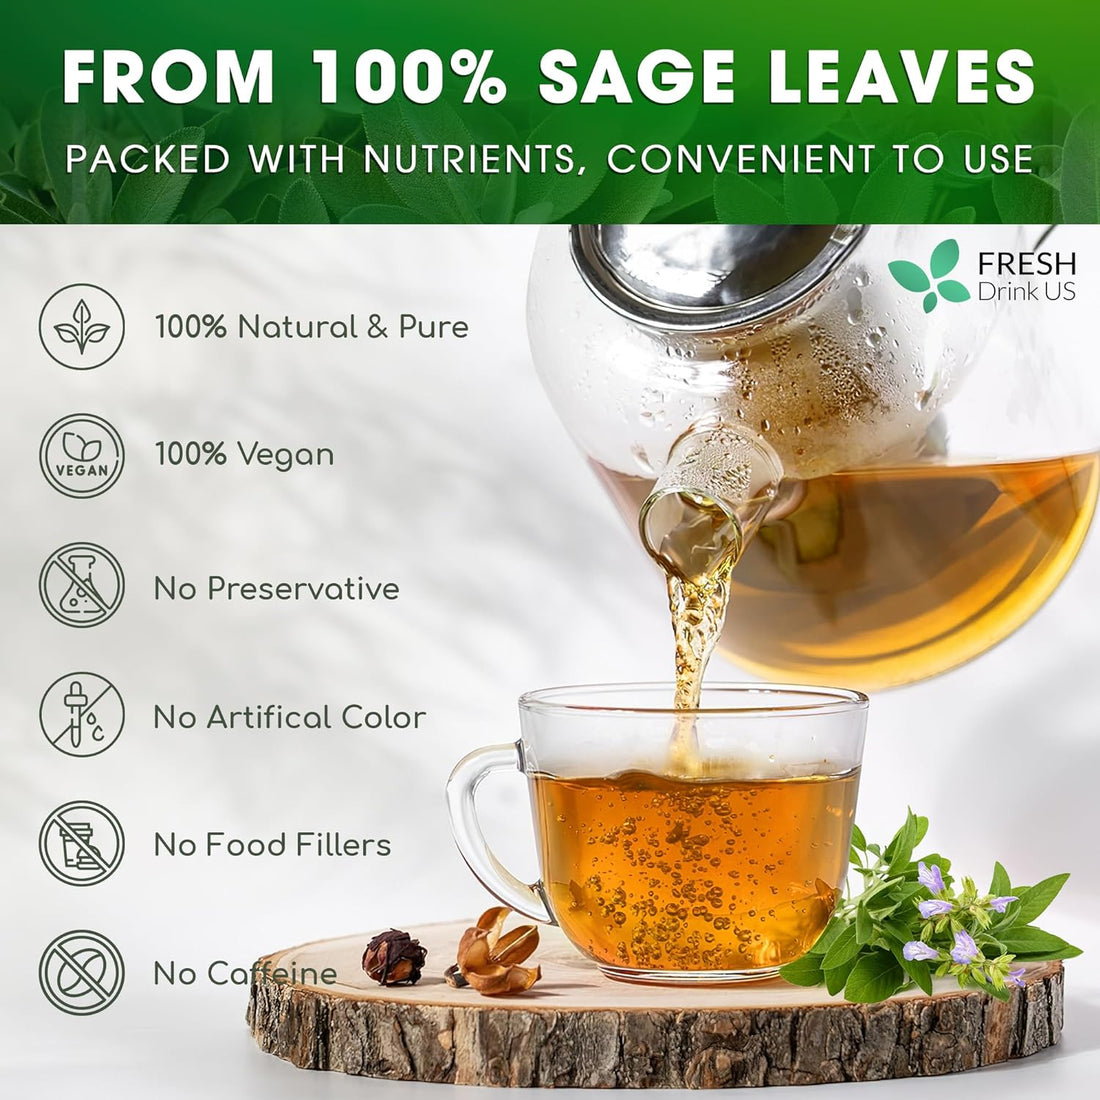 Sage Leaf Tea Bags, 100% Natural & Pure from Sage Leaves. Loose Leaf Sage Herbal Tea. Sage Leaf Tea. Made with Natural Material Tea Bags. No Sugar, No Caffeine, No Gluten, Vegan.